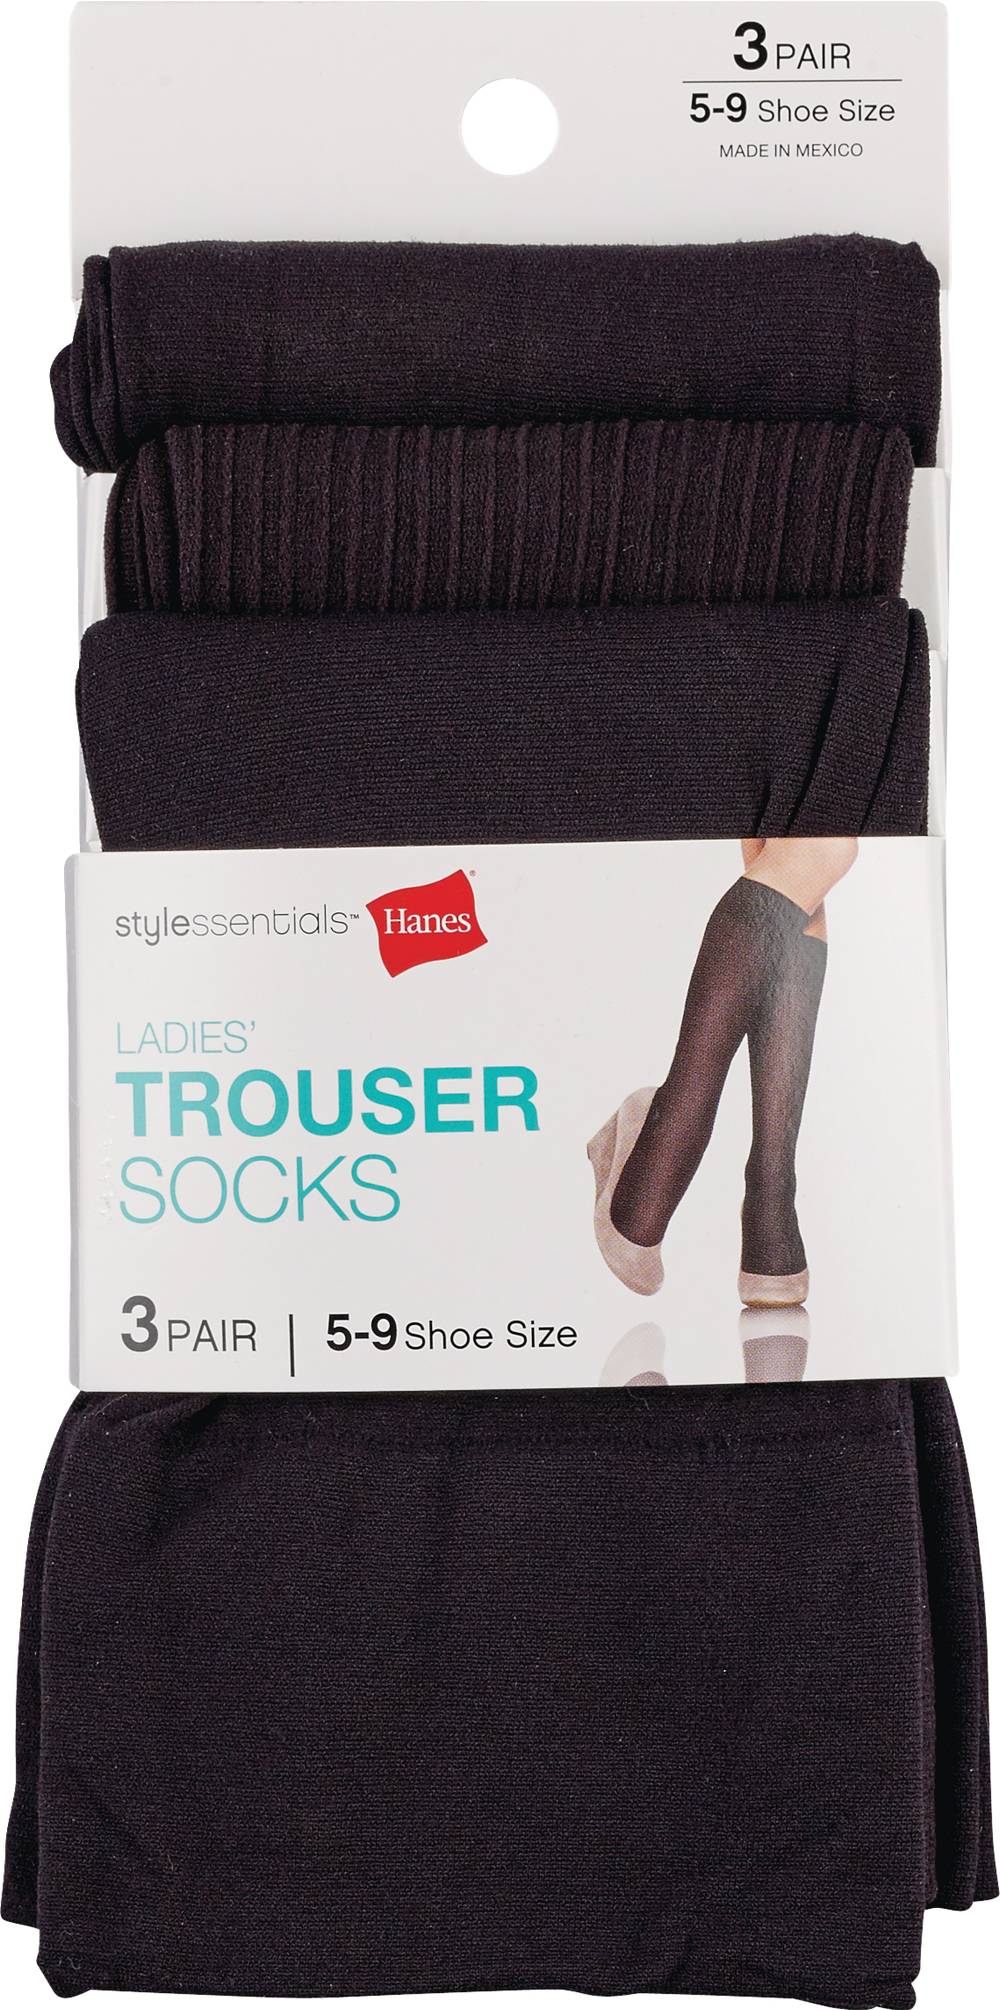 Style Essentials Ladies' Dress Socks Trouser, Black, Size 4-10